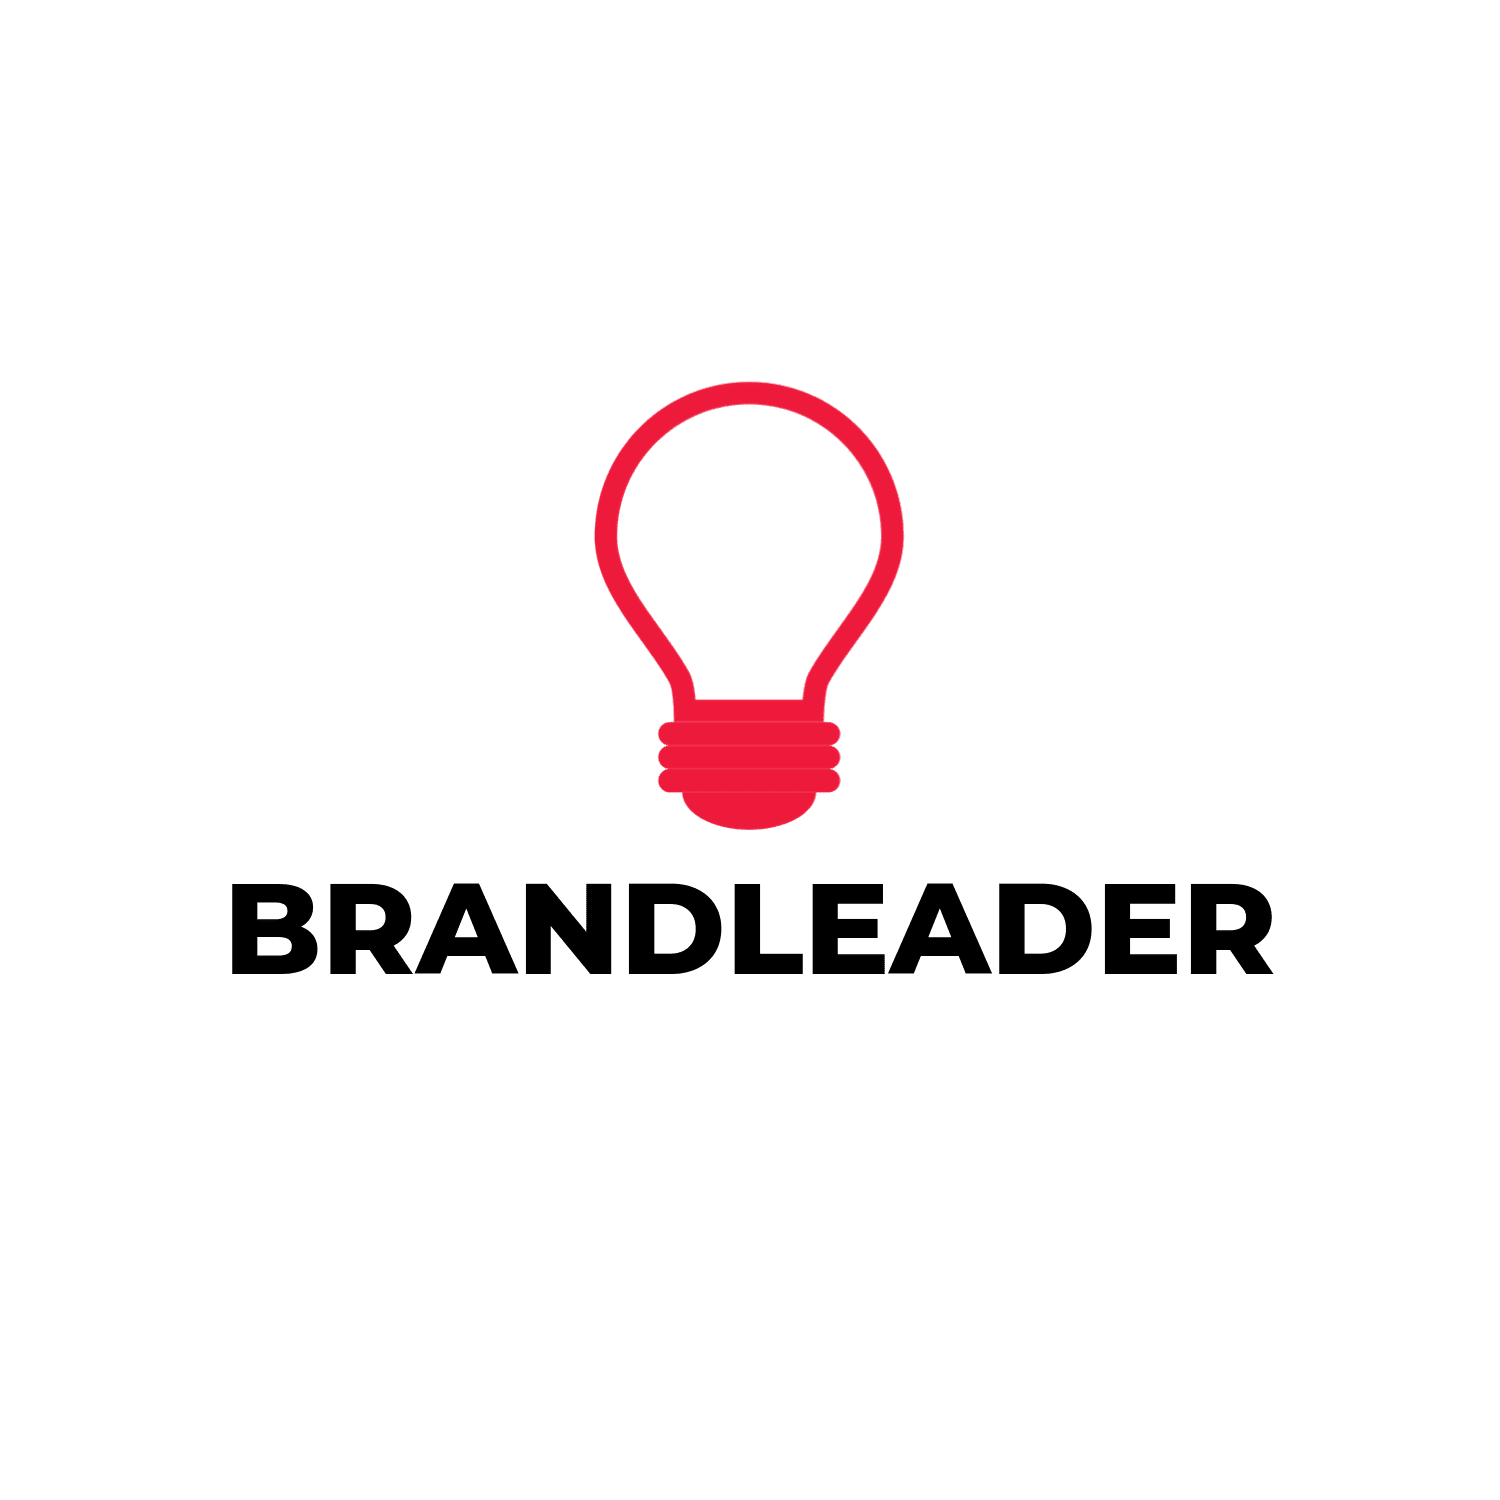 Brandleader